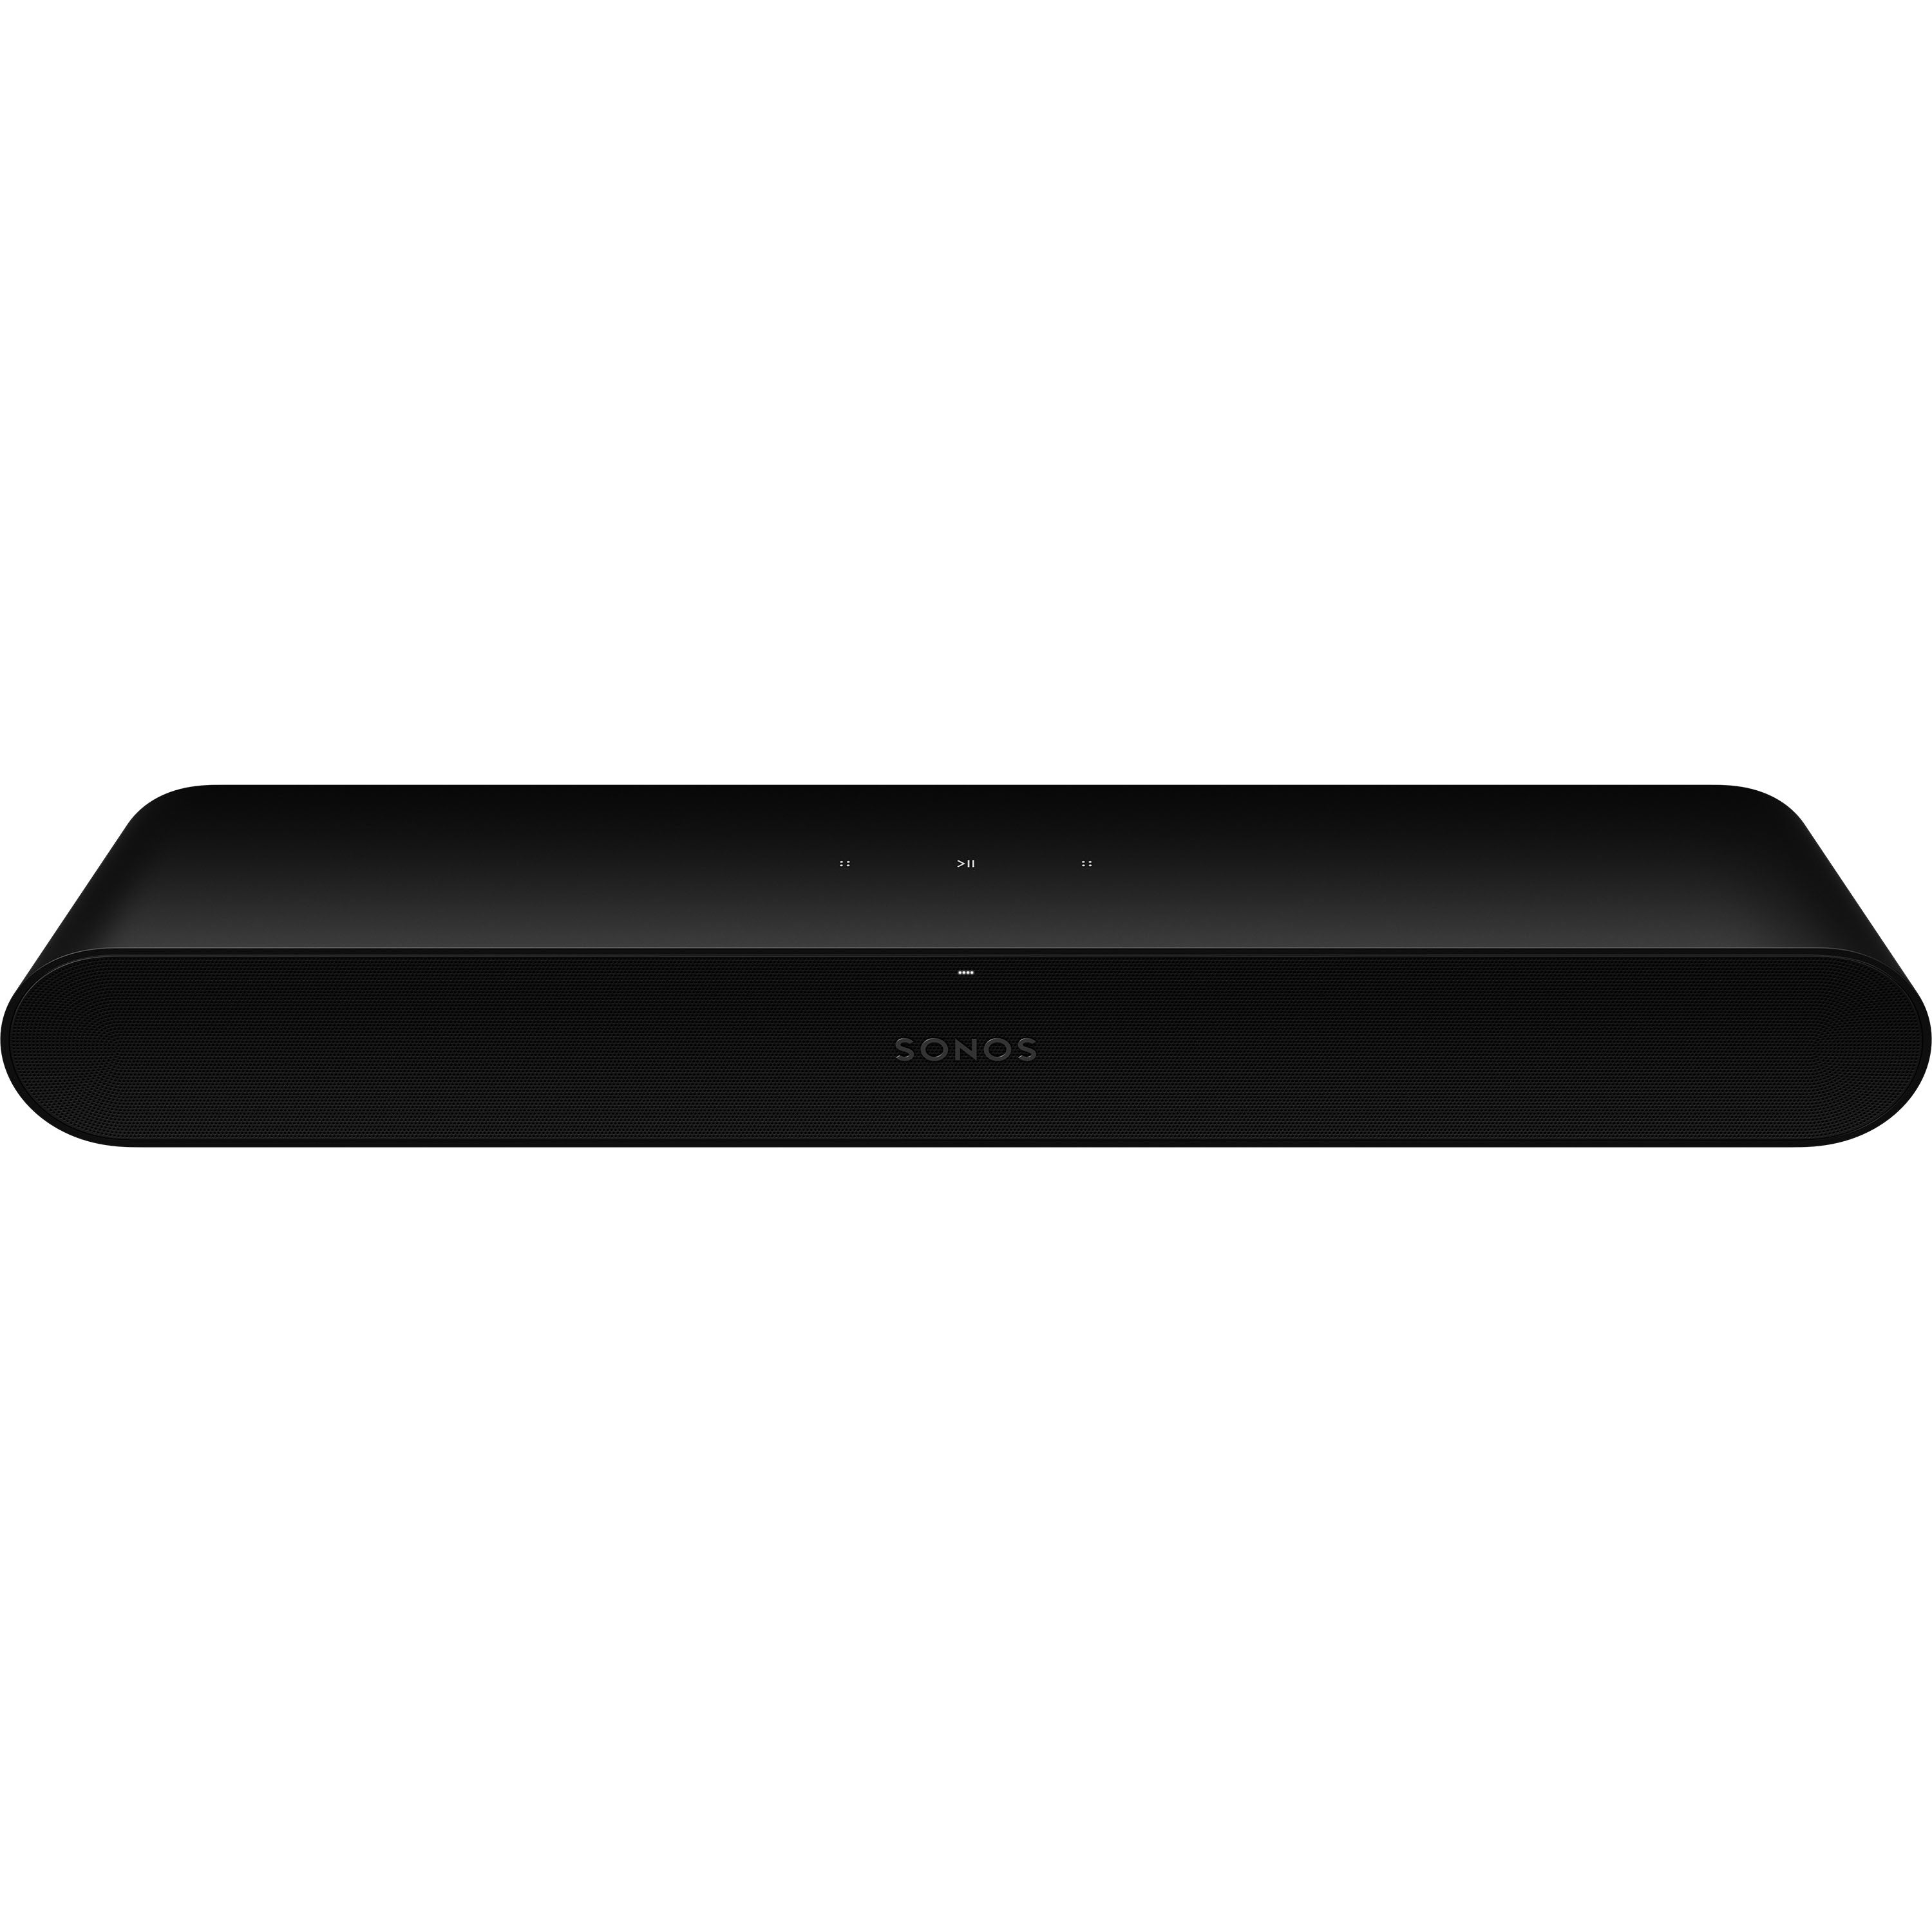 Sonos RAY Soundbar - The Small HD Gaming Soundbar